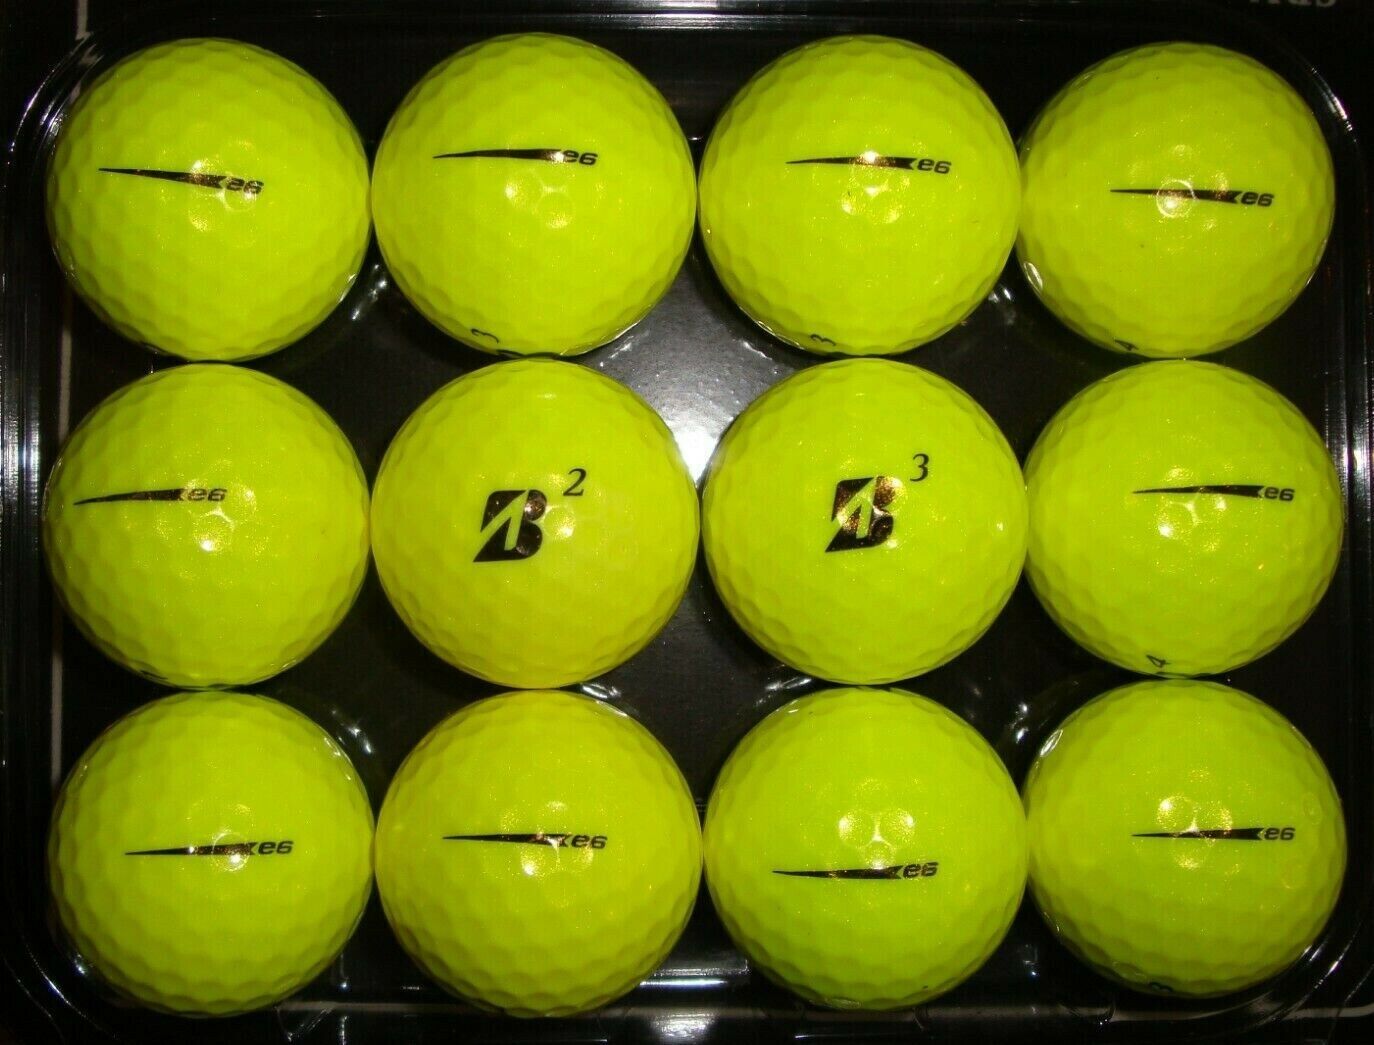 12 Bridgestone E6 yellow golf balls 2020 